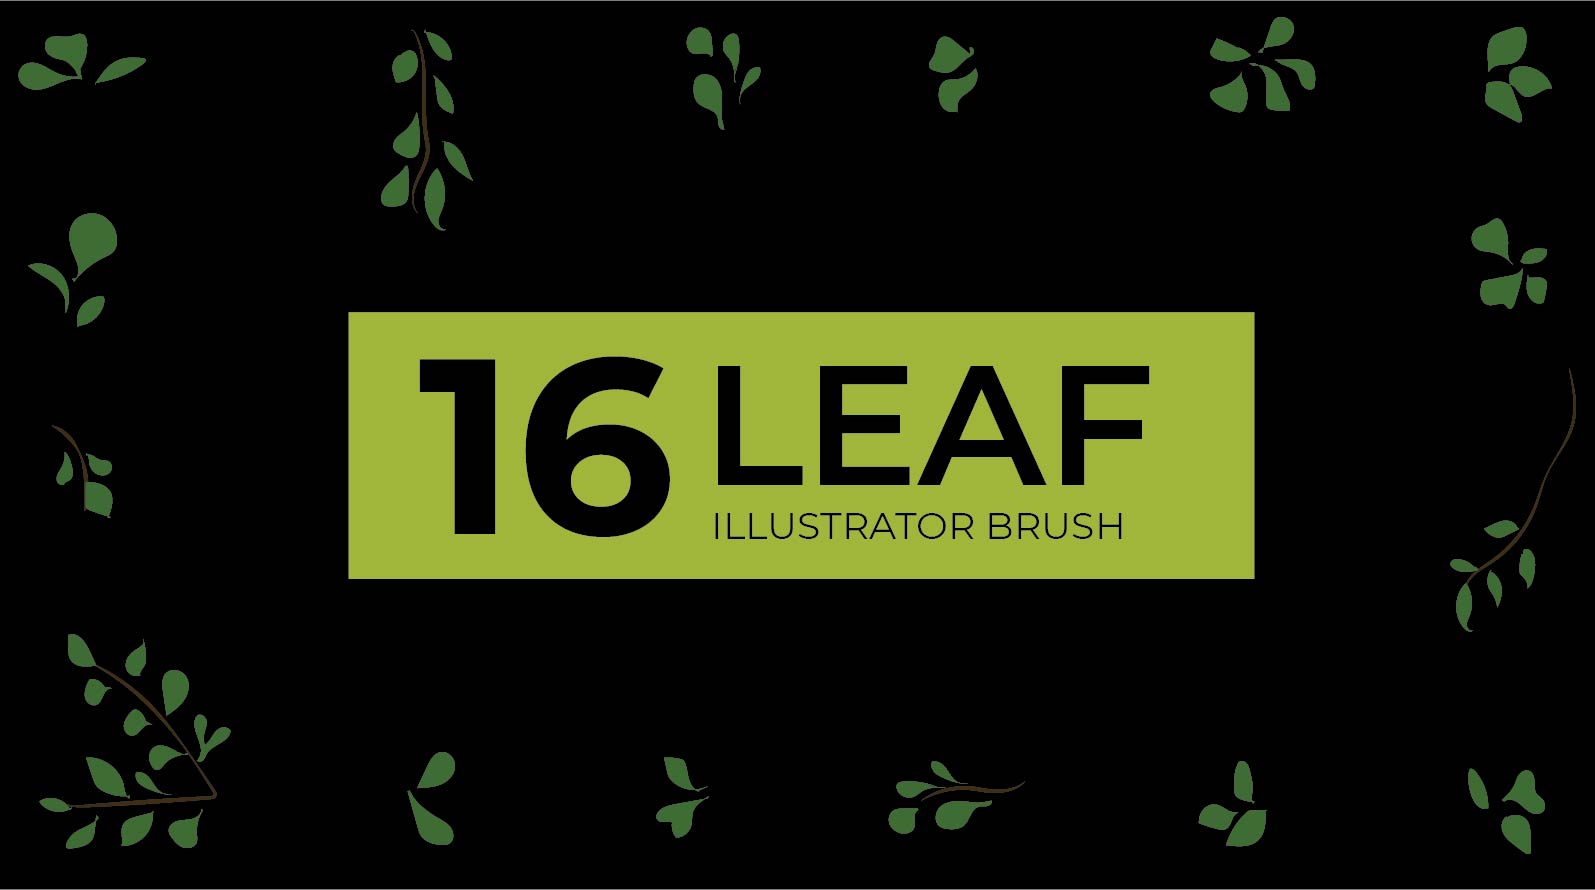 16 Adobe Illustrator leaf Brush Sets You Can Download For Free | Bisakhadatta Photography